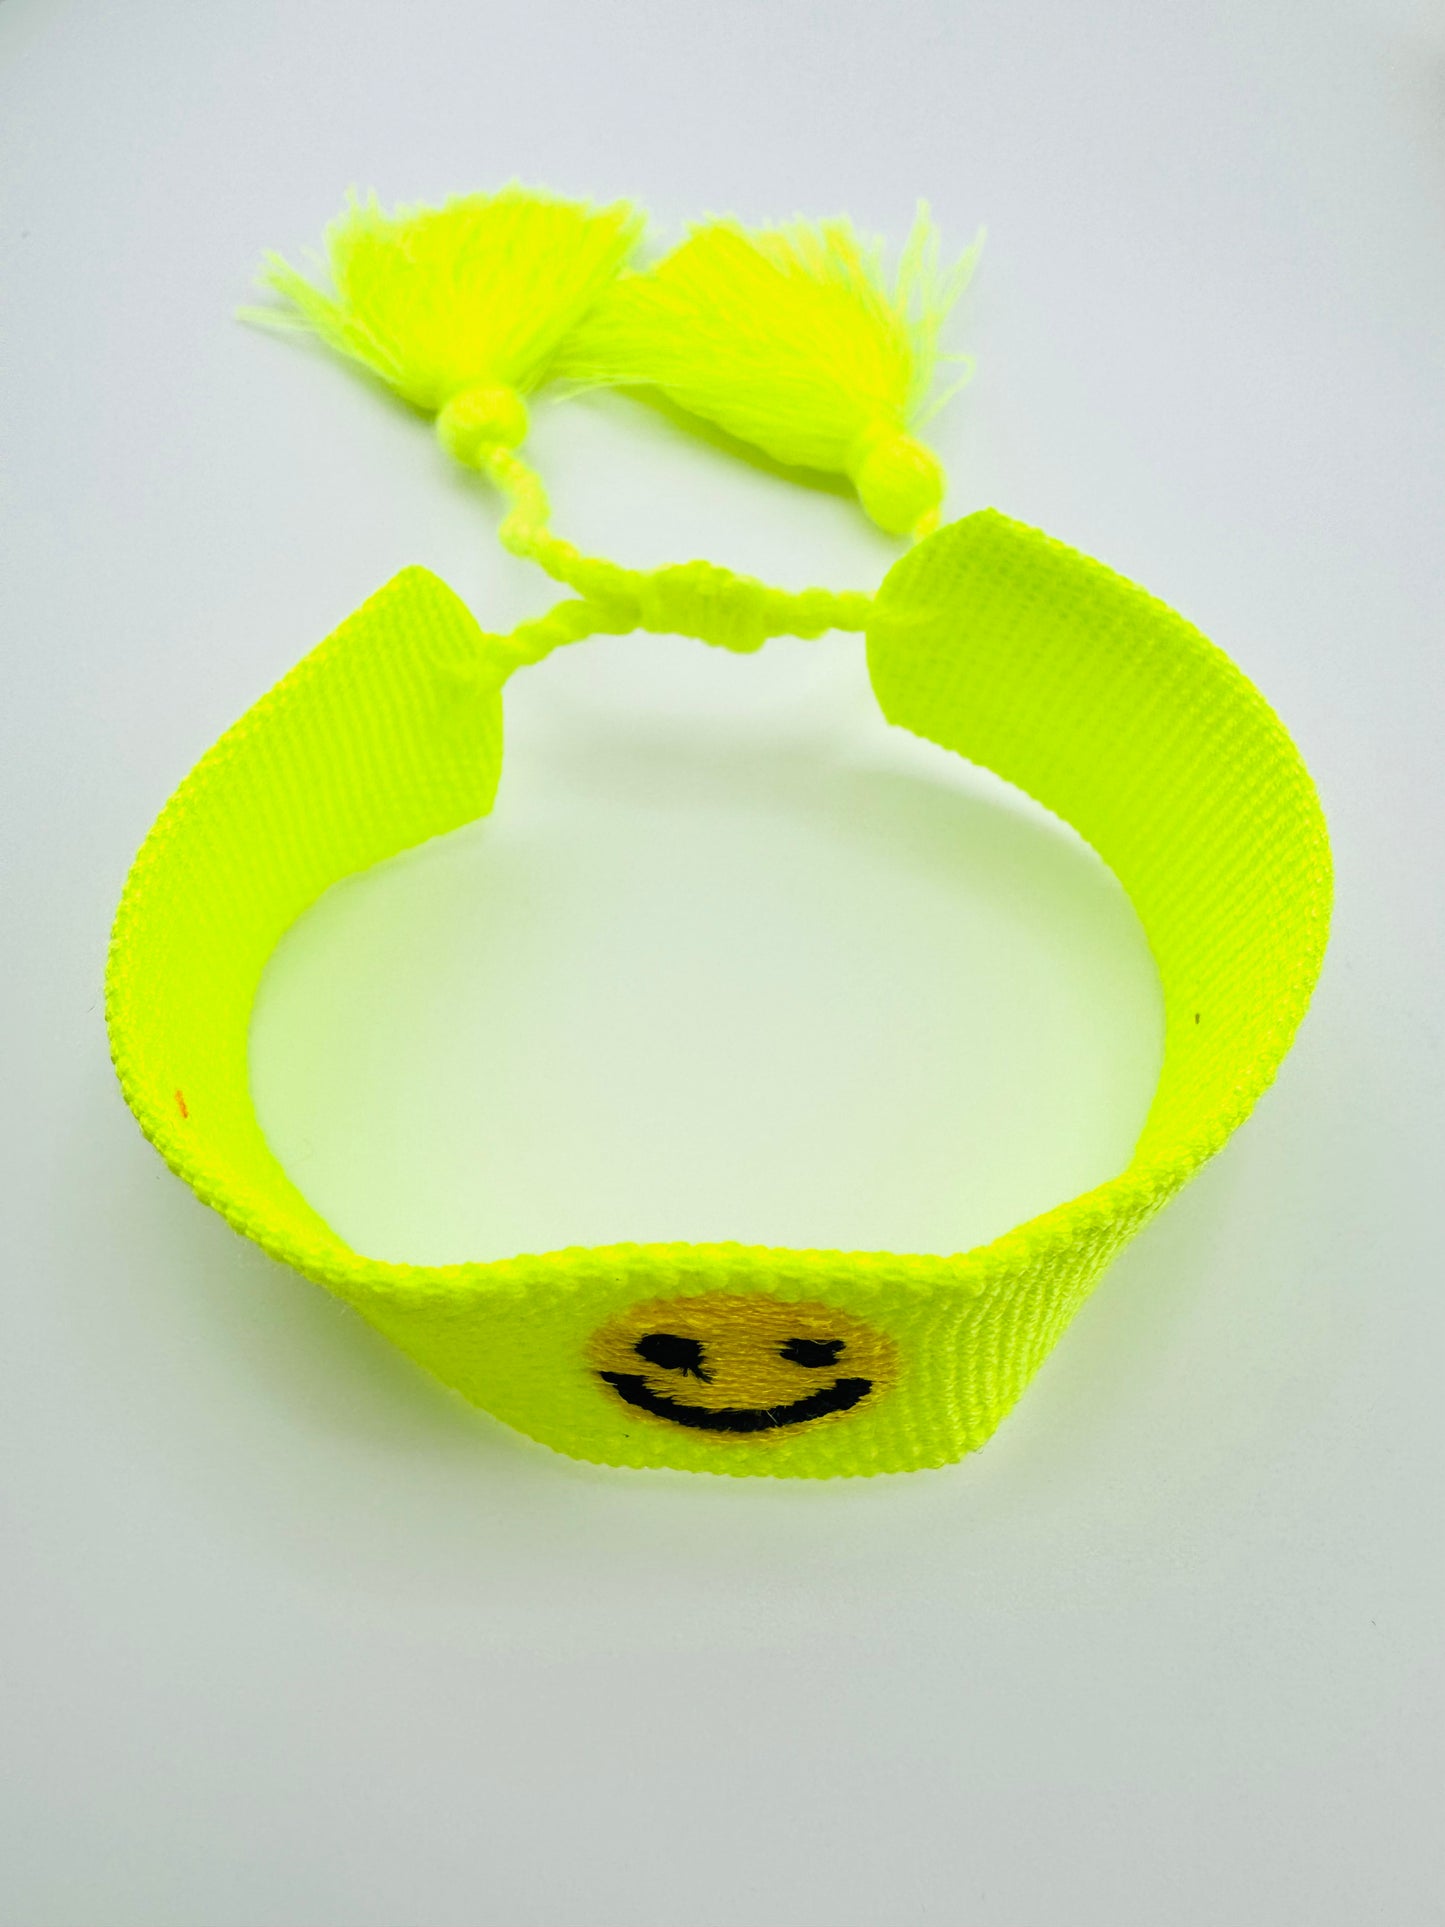 Millie woven neon yellow bracelet in happy face